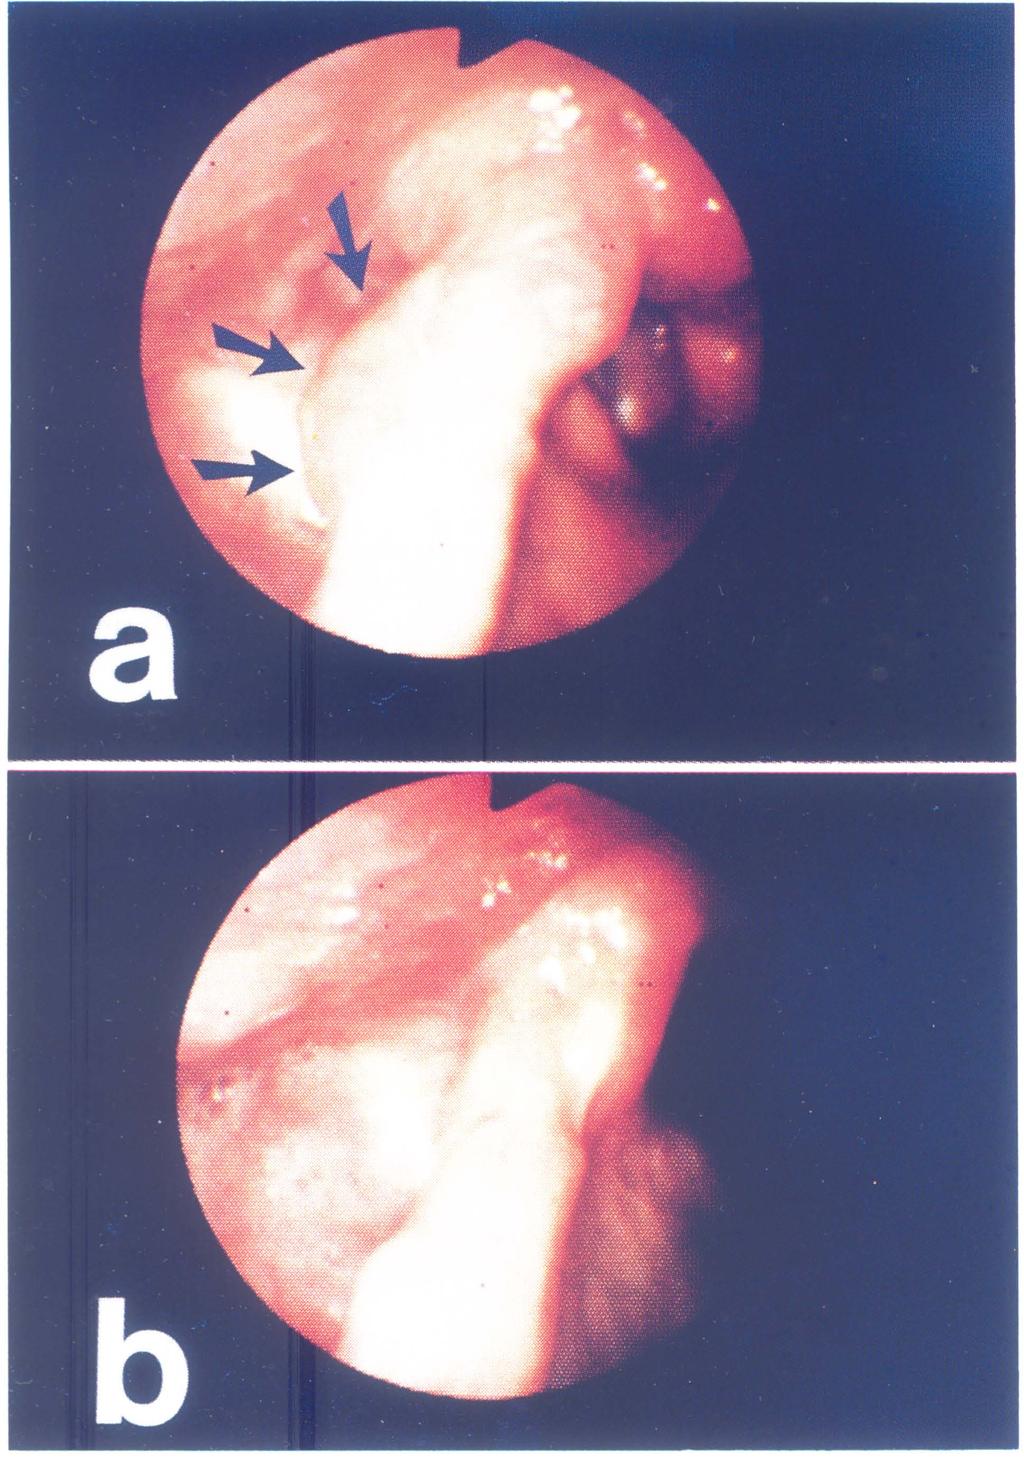 54 M. KAWAIDA et al. Histopathologically, the lesion was identified as a lymphoepithlial cyst (Fig. 4).